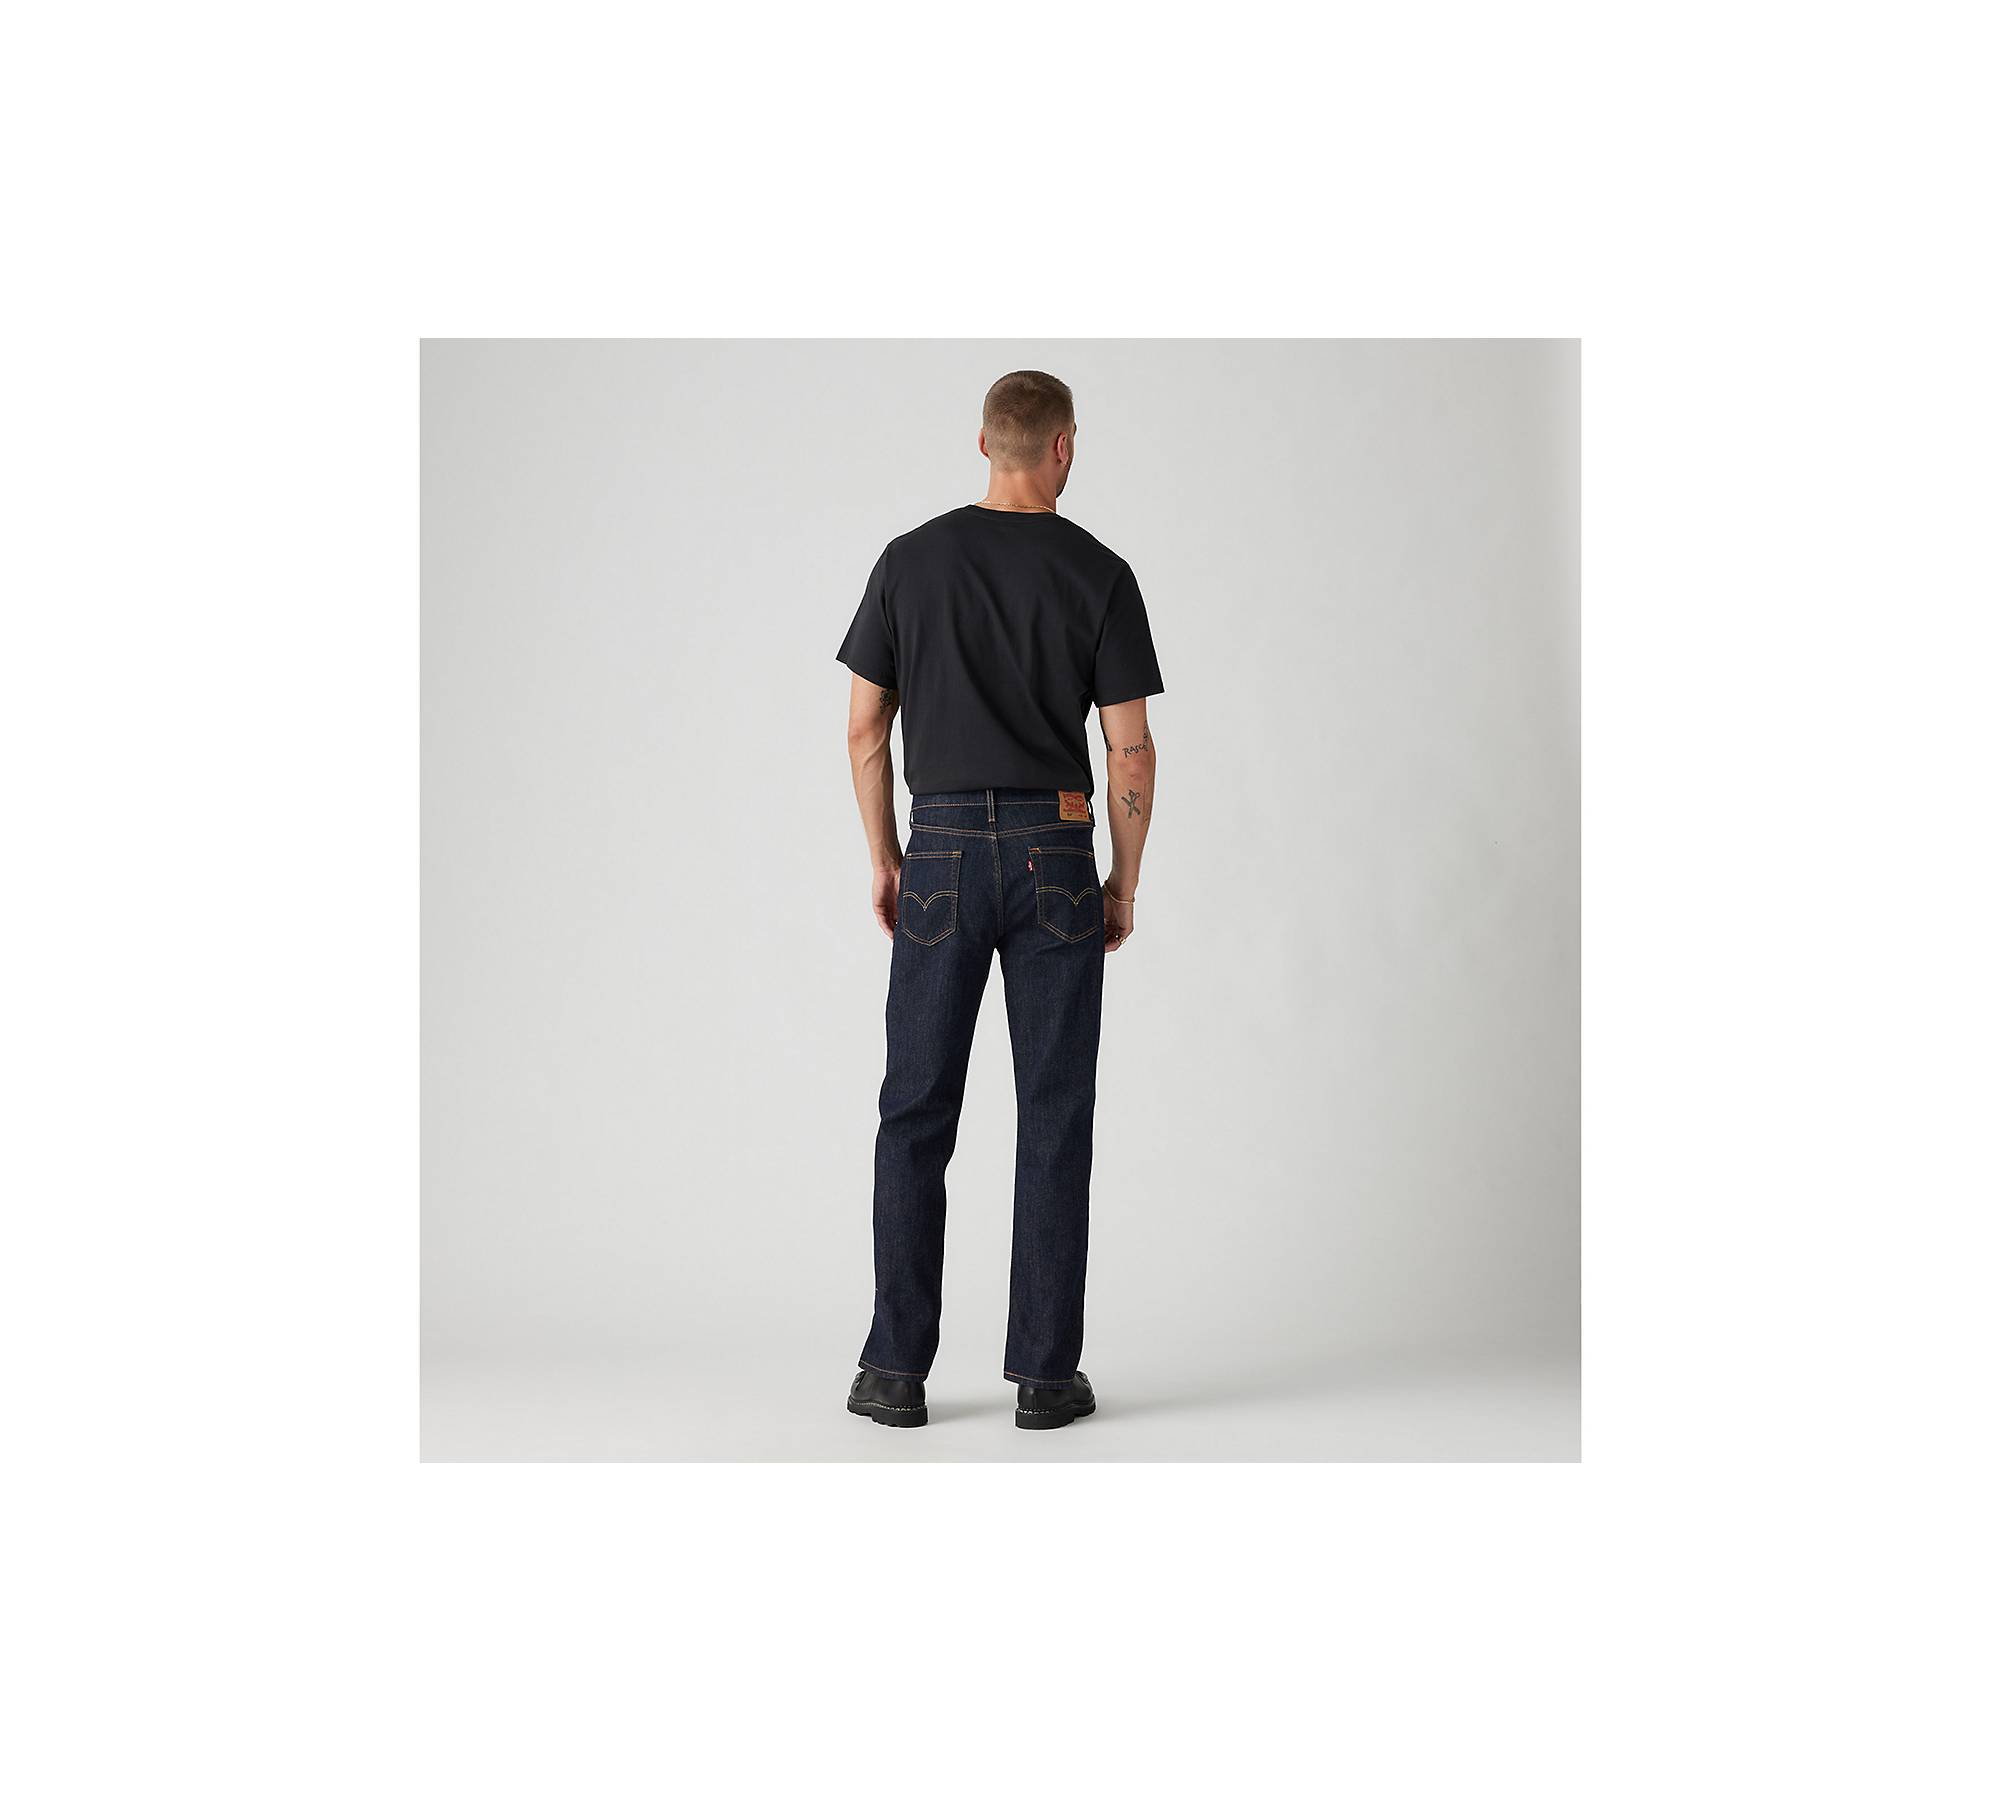 LEVI'S Men's 514 Straight Fit Advanced Stretch Jeans